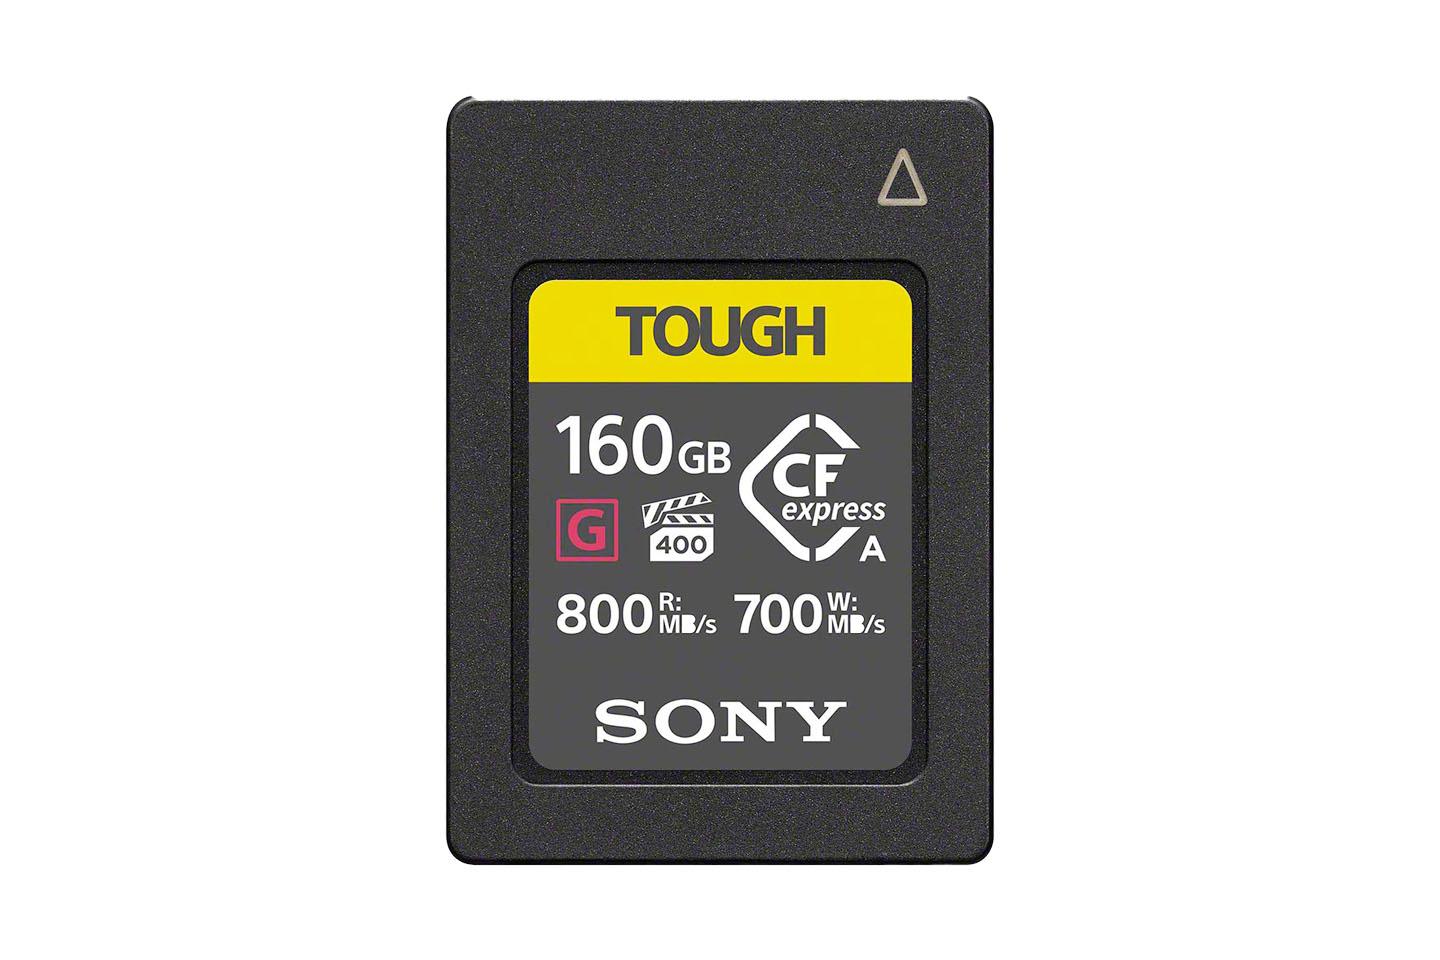 CFexpressTypeAカード160GB(SONY Tough G)